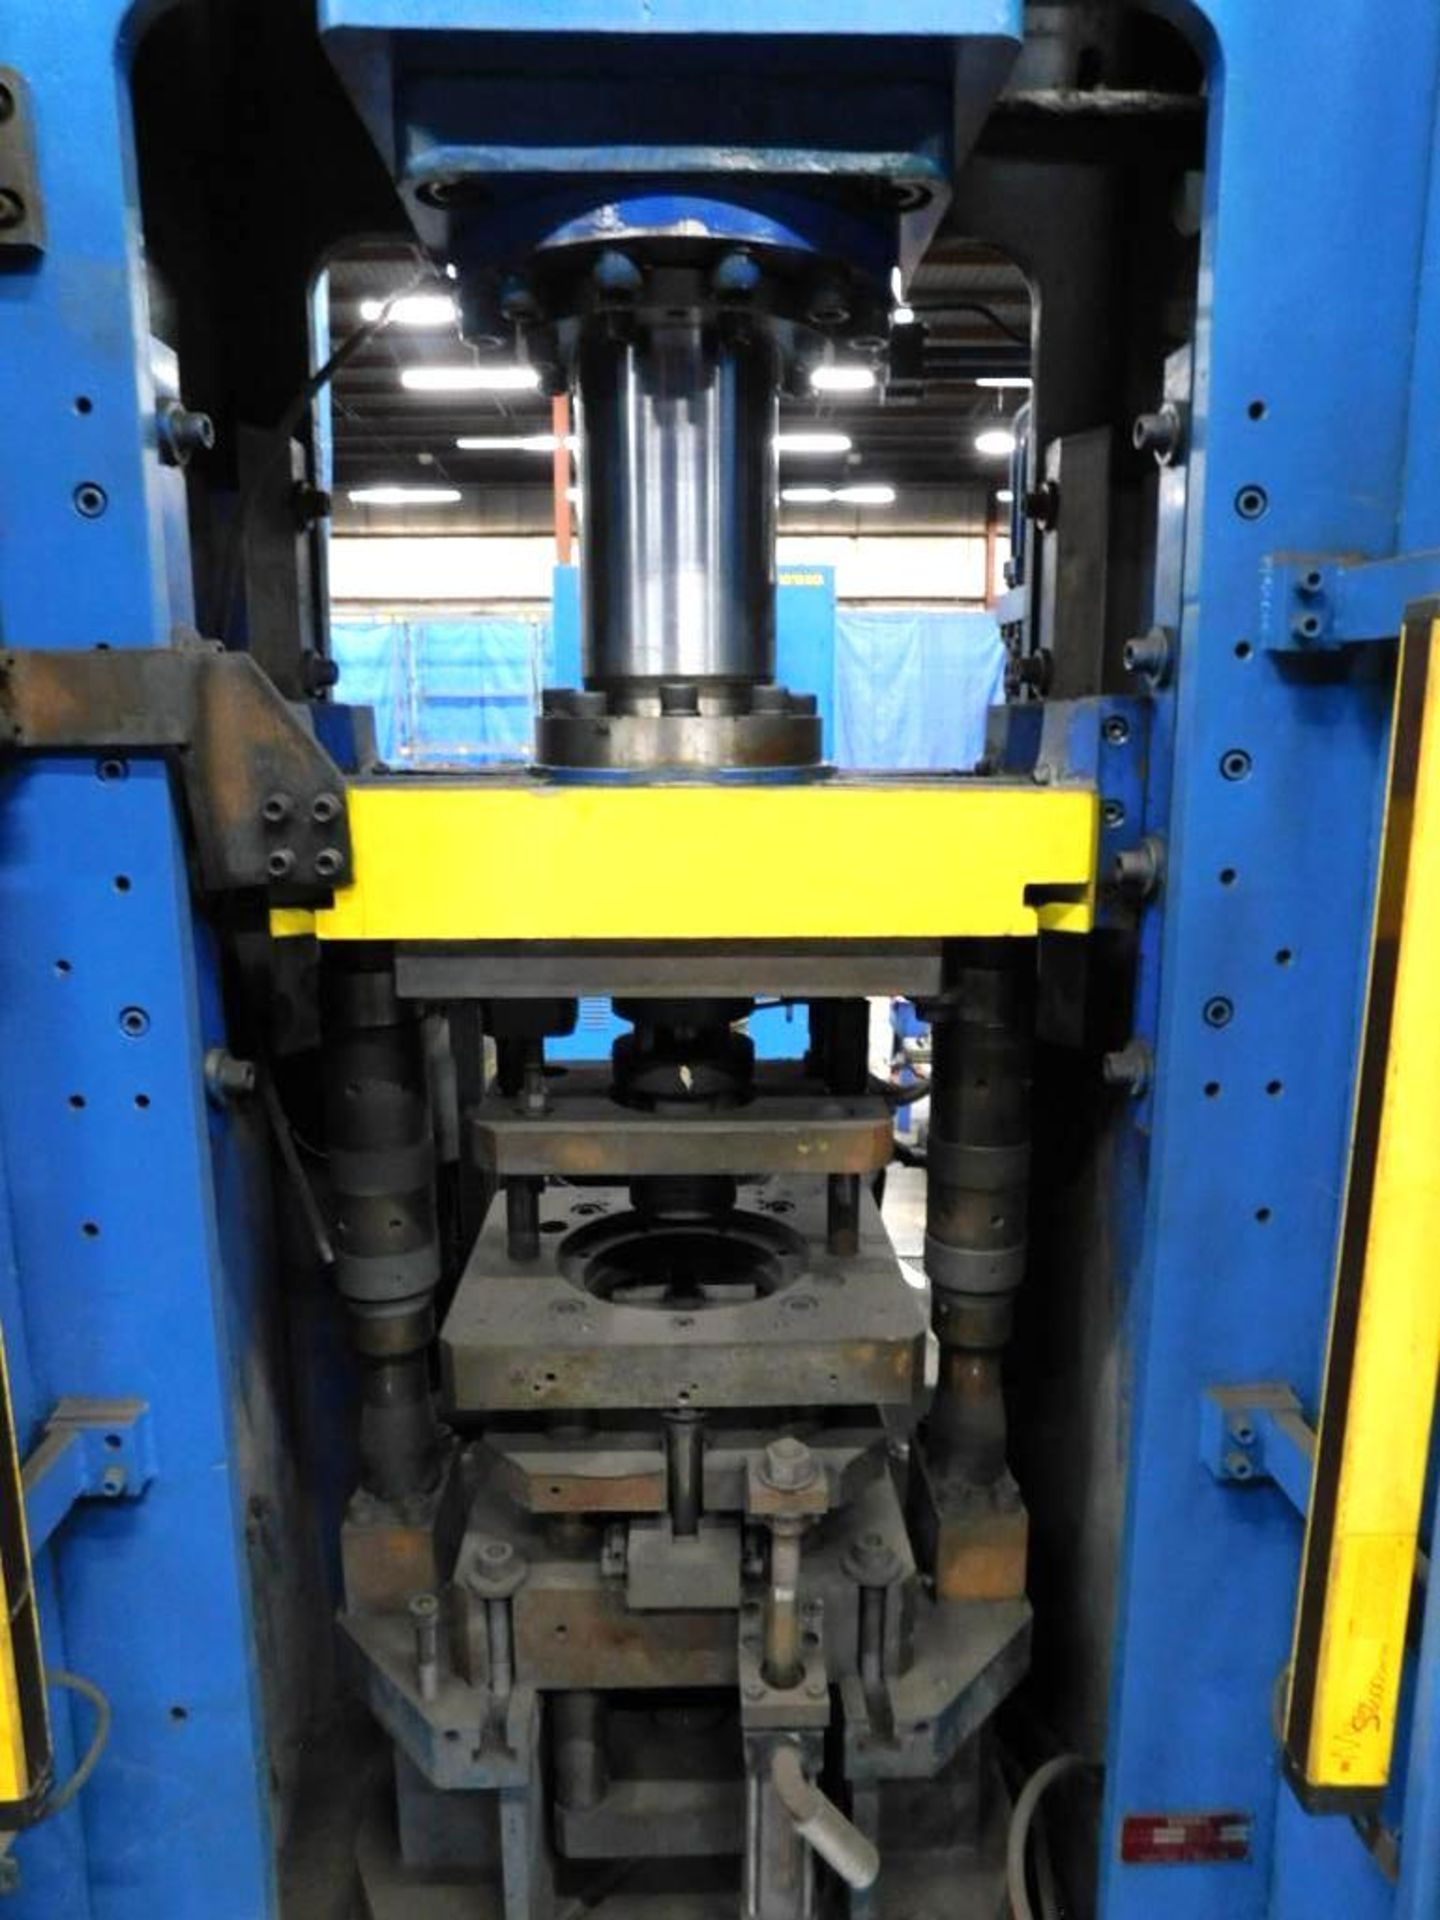 Kotaki Powder Compacting Press, Hydraulic, Model KPH-100, S/N: 2123, 100 Ton Maximum Pressing Force, - Image 10 of 27